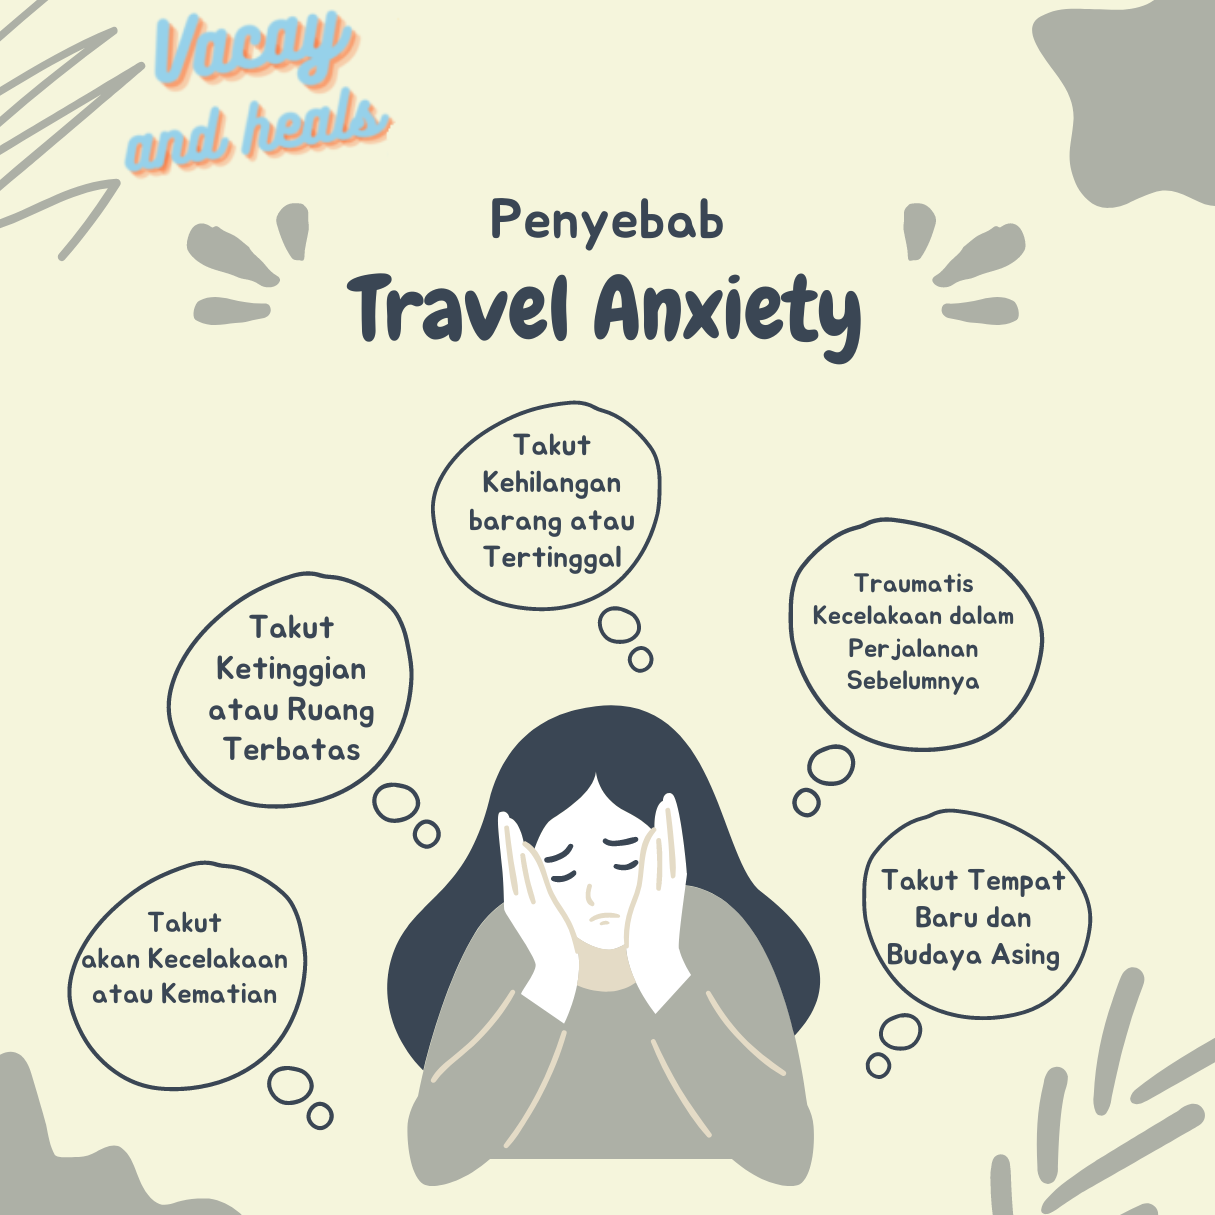 Penyebab Travel Anxiety